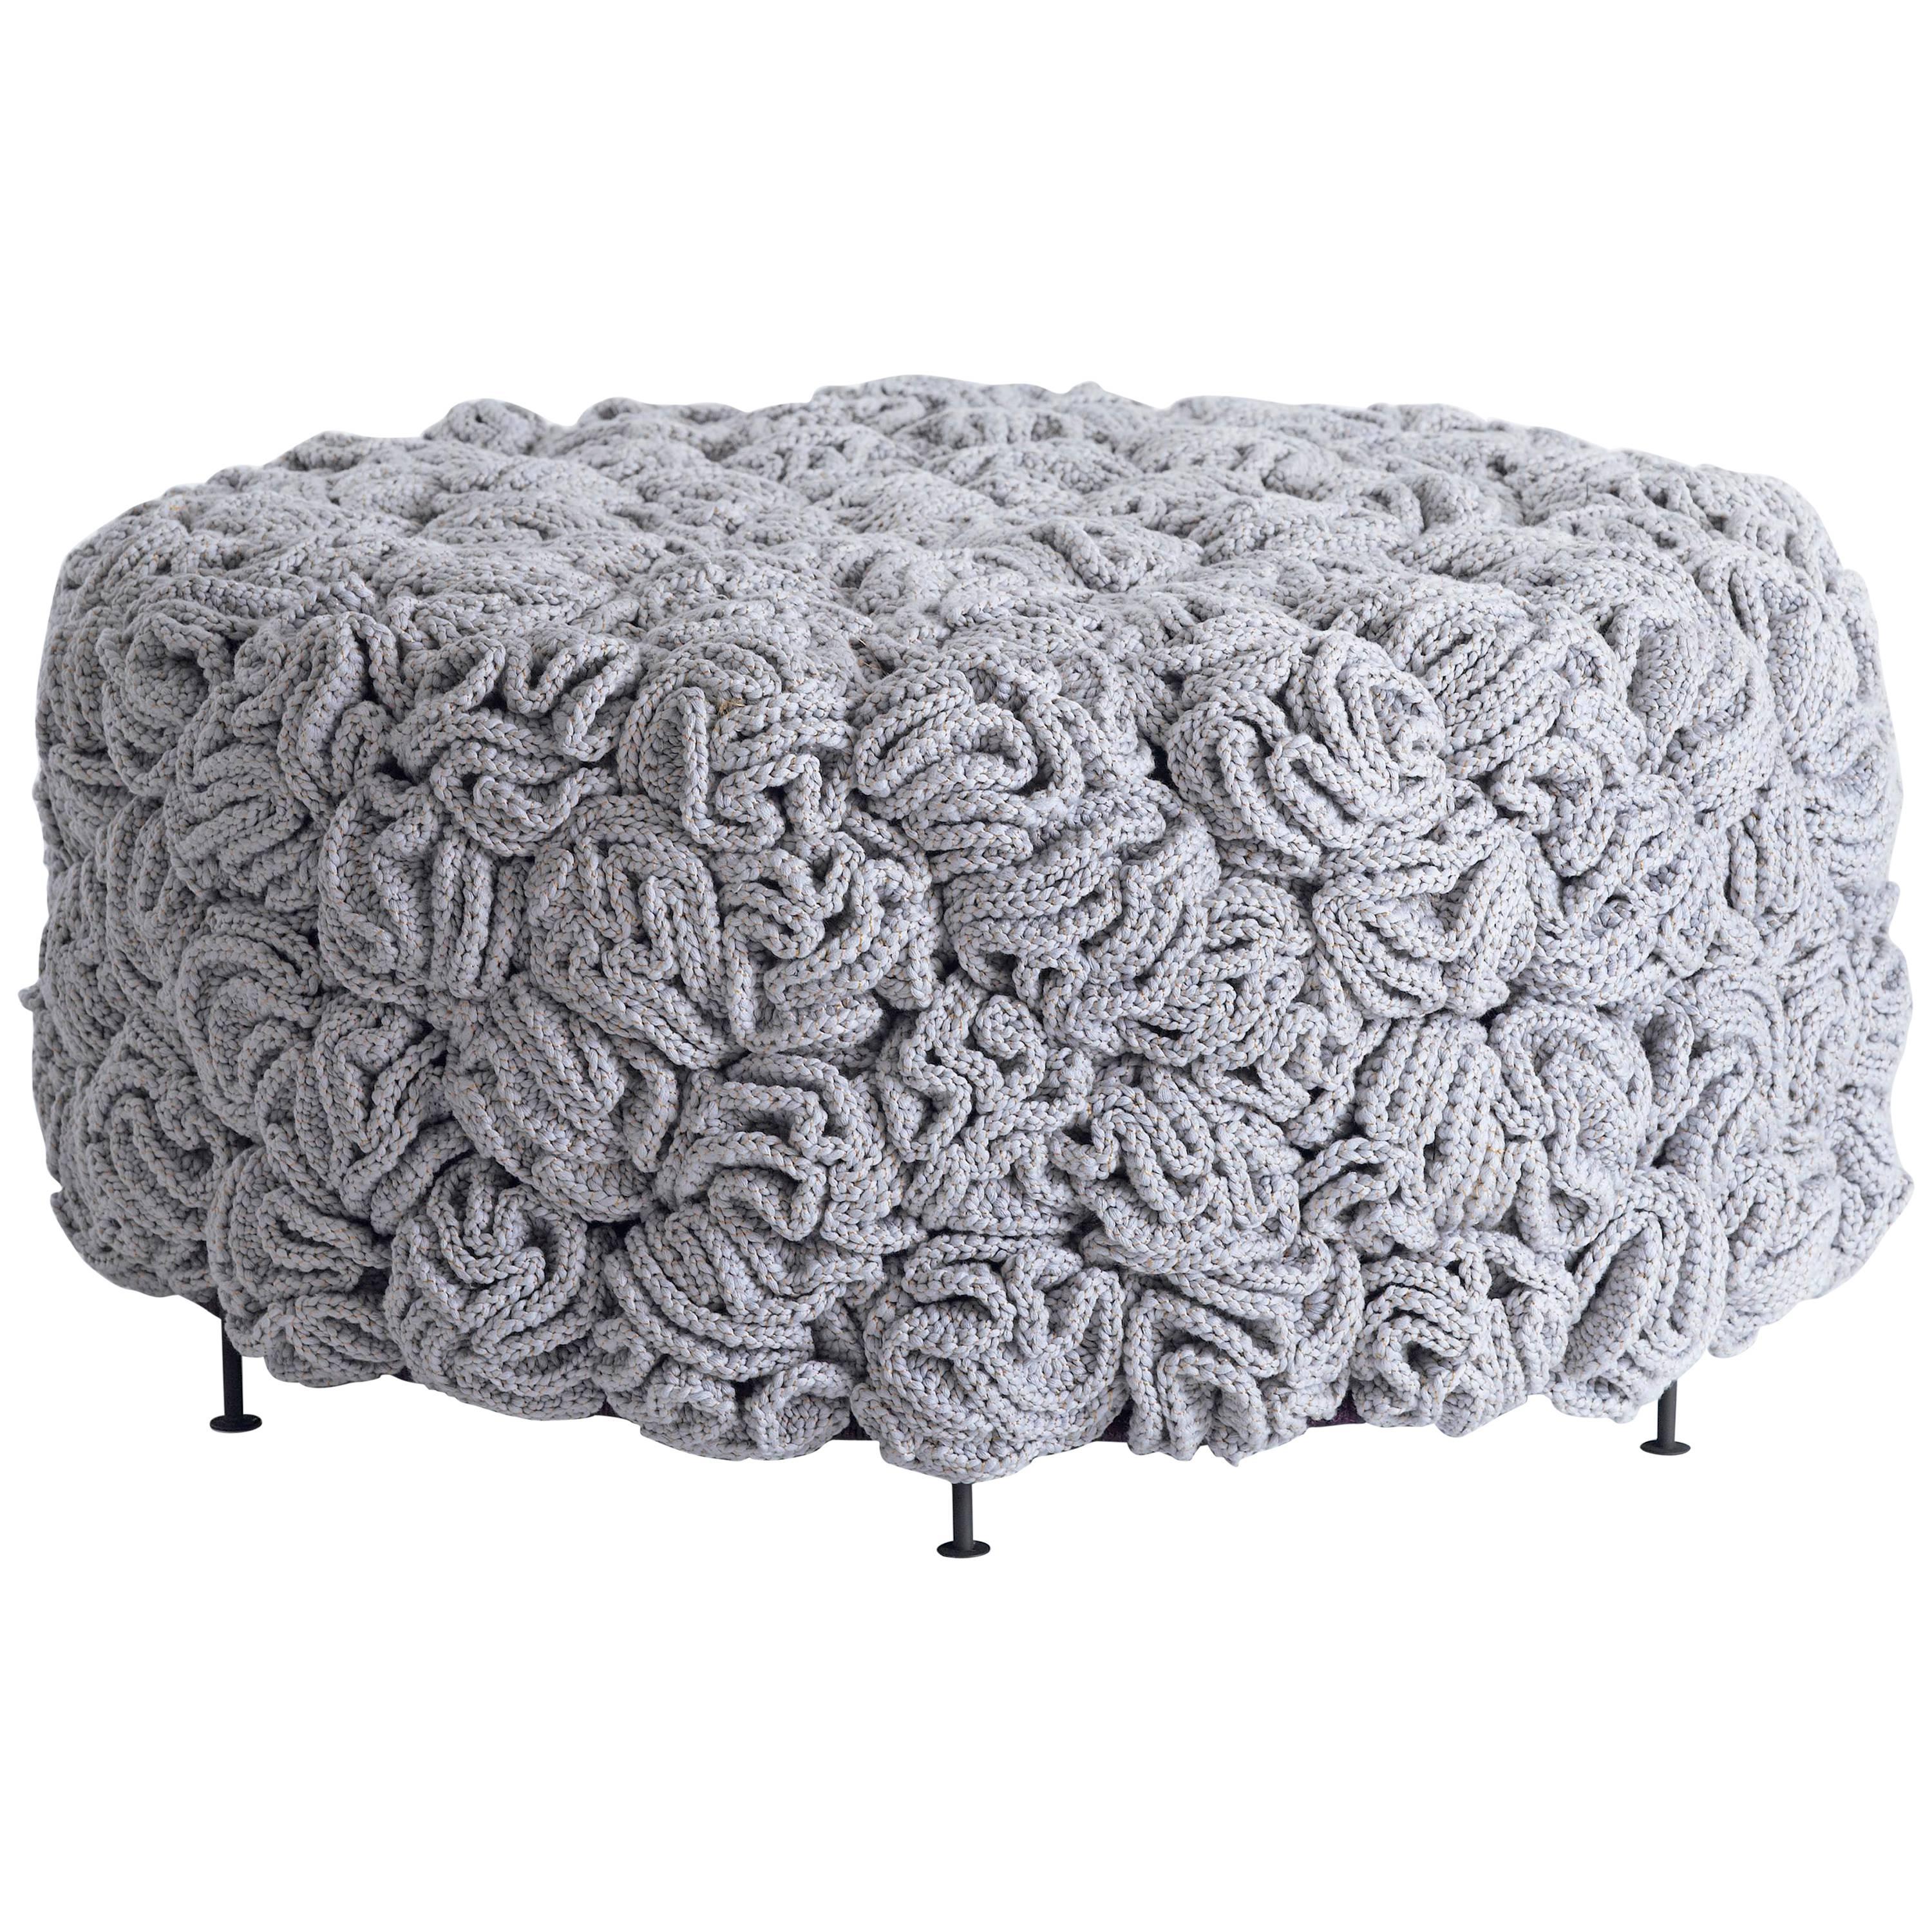 Handmade Crochet Elements Cotton and Polyester Grey Iota Pouf